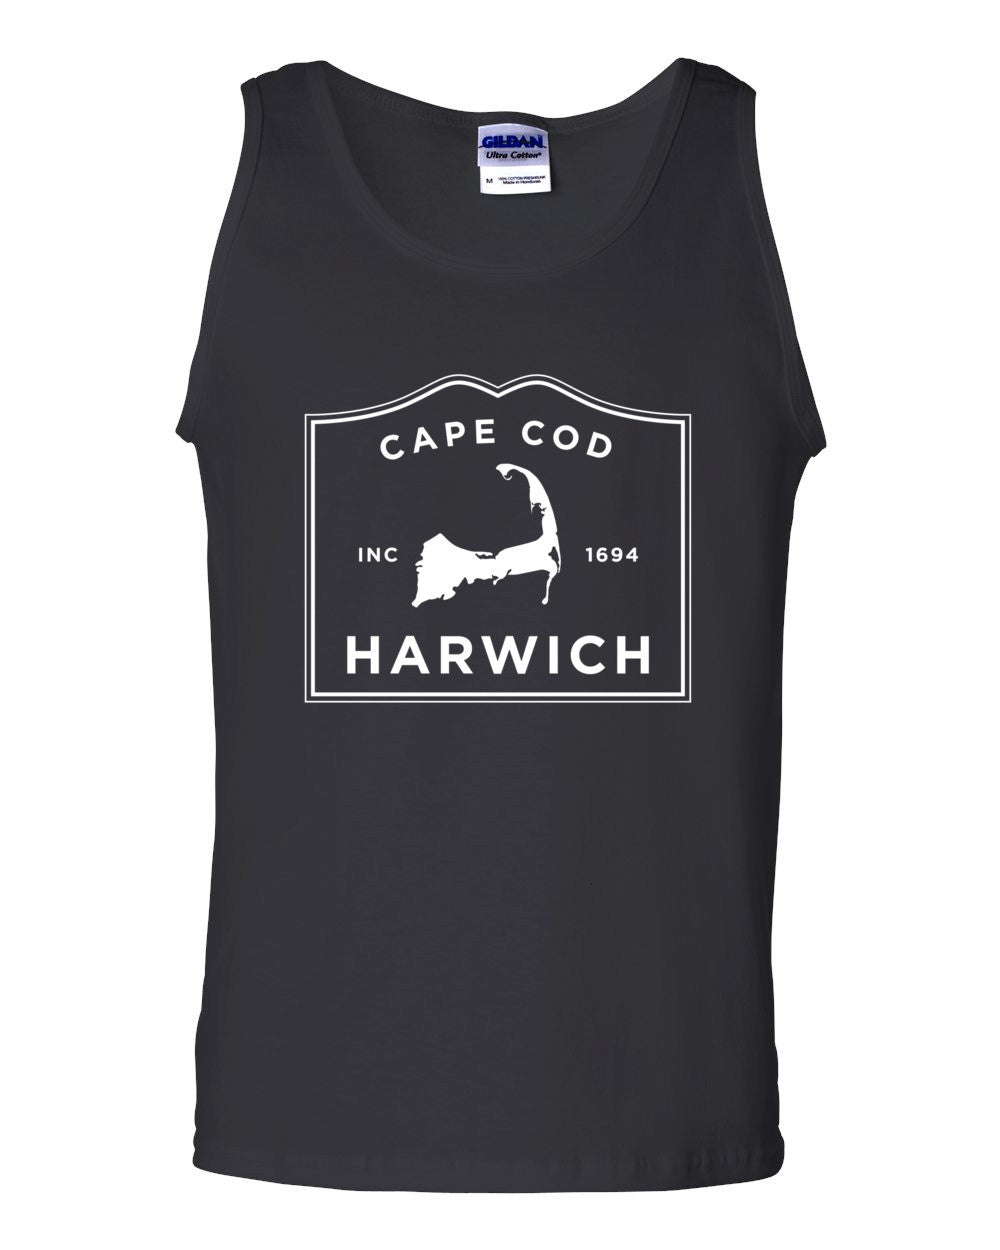 Harwich Cape Cod Tank Top